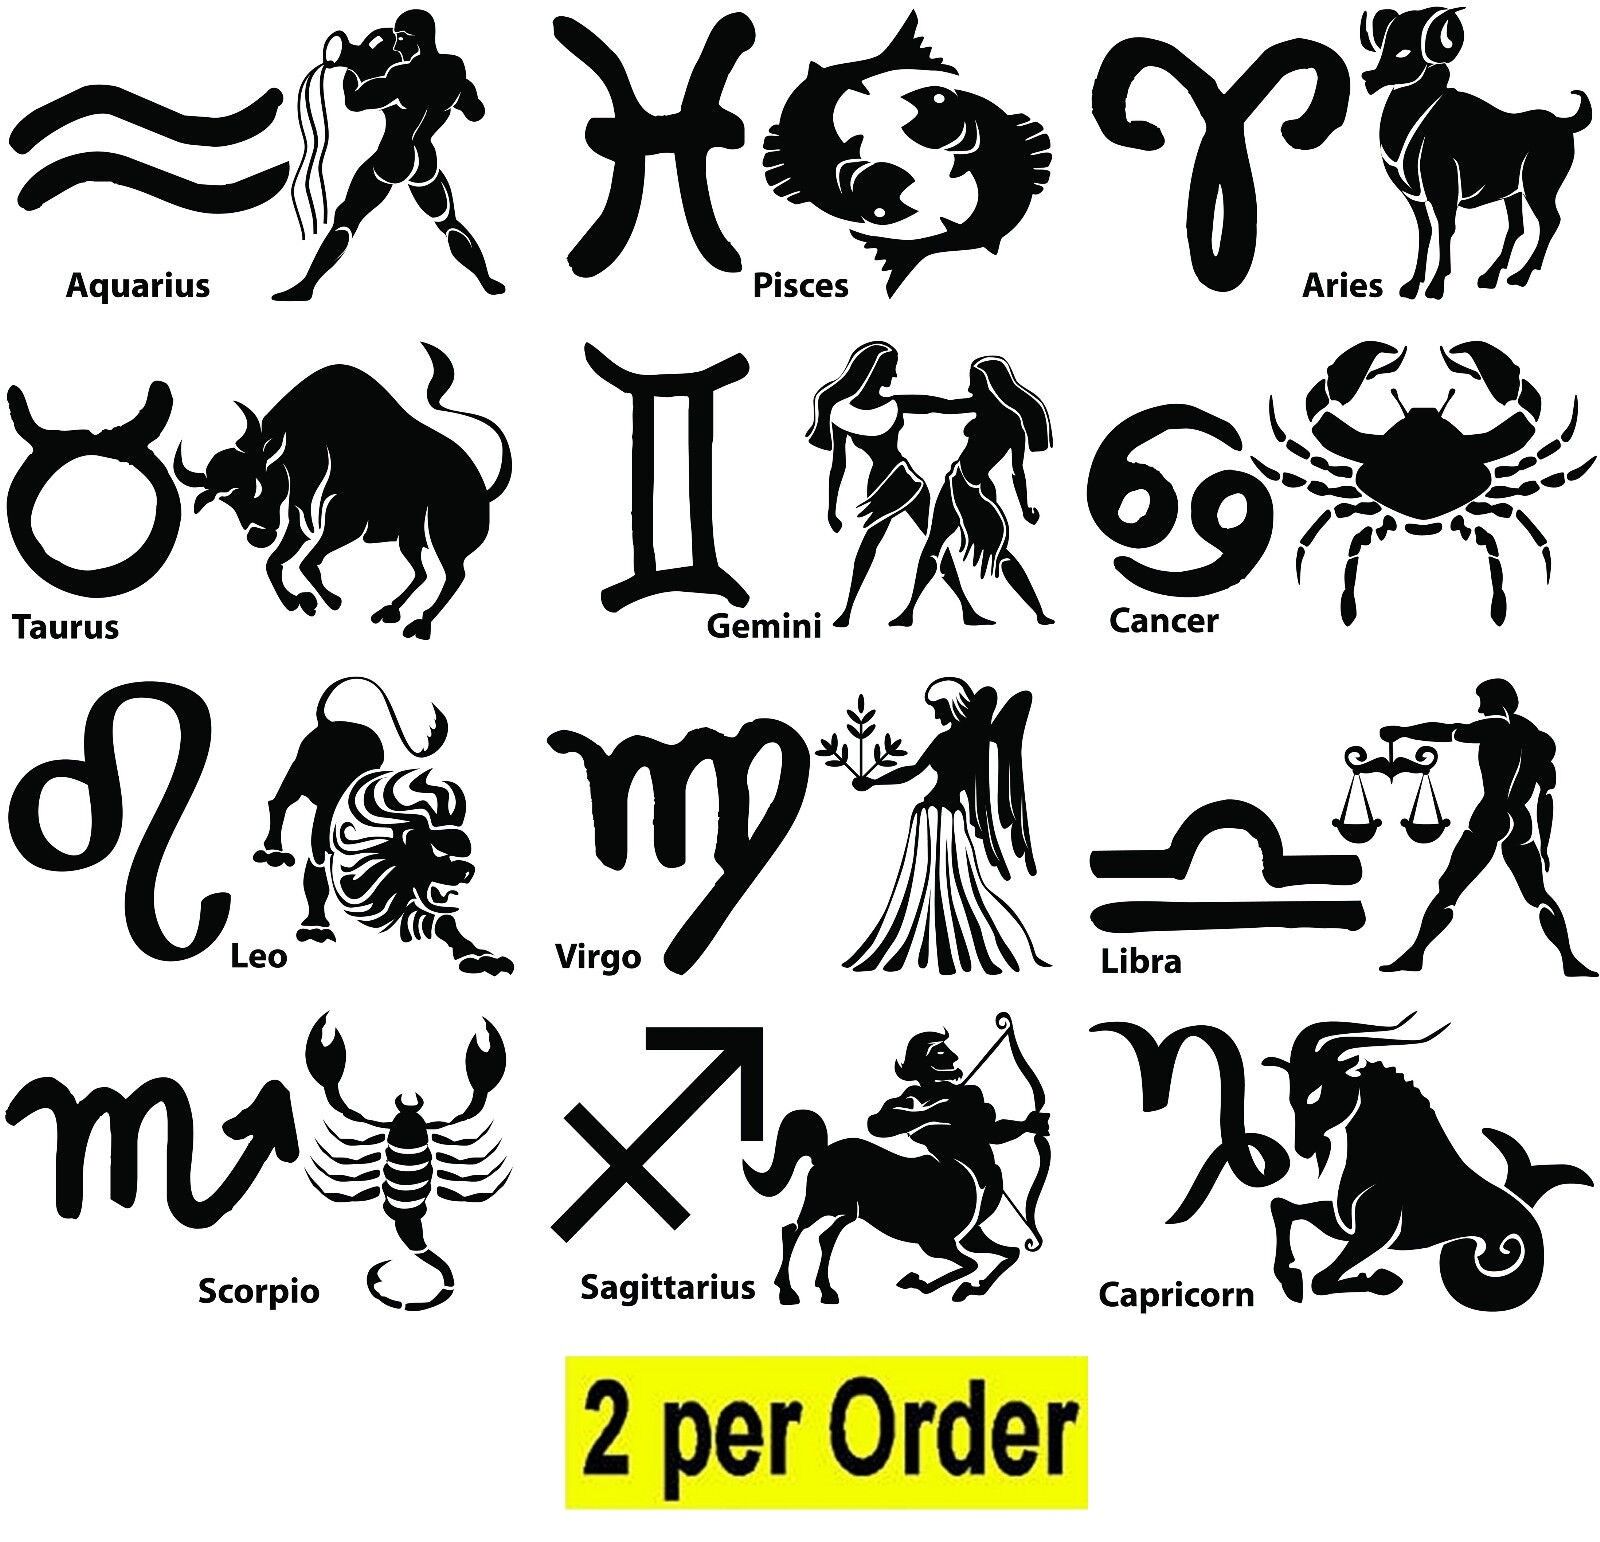 Temporary Tattoo Zodiac Star Birth Sign Astrology Horoscope - Design Choice  | eBay